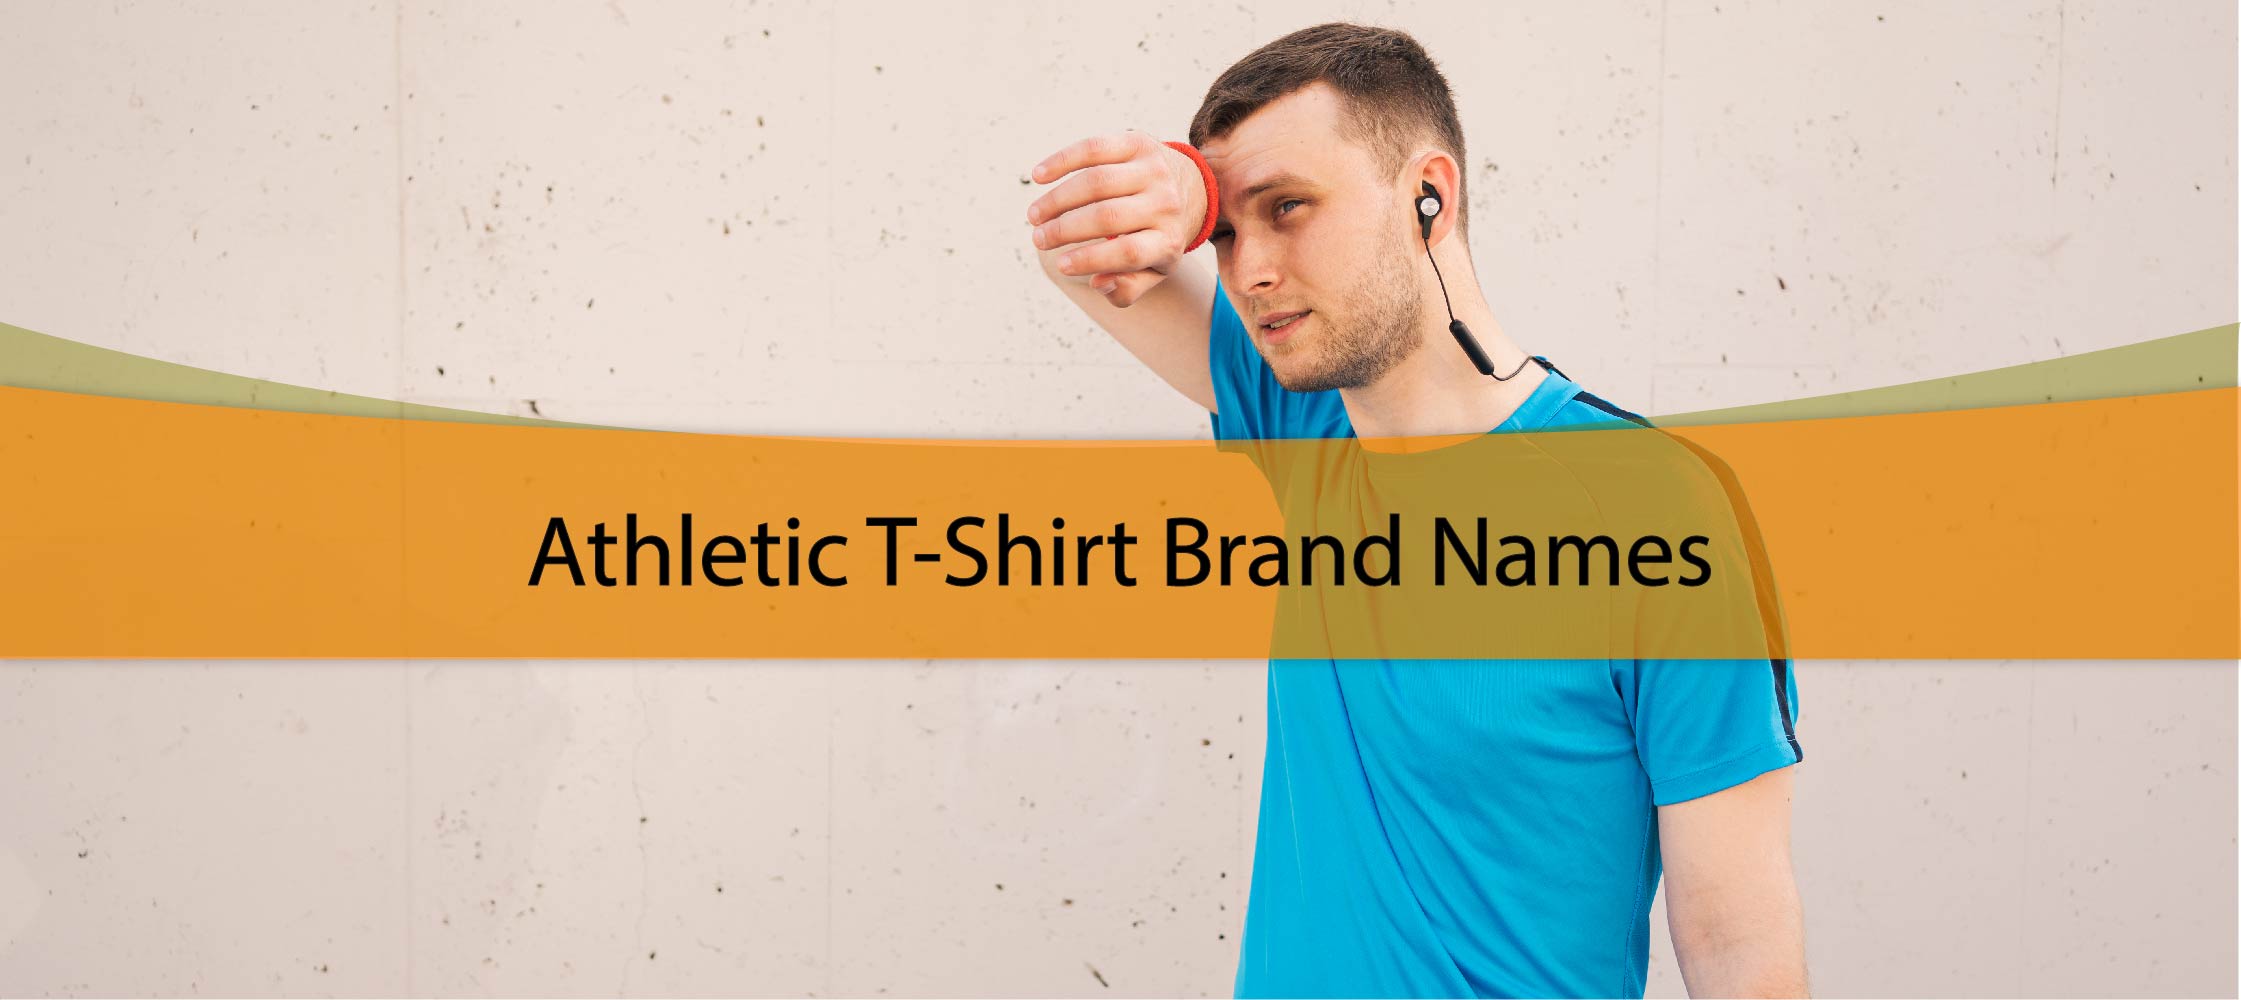 Athletic T-Shirt Brand Names